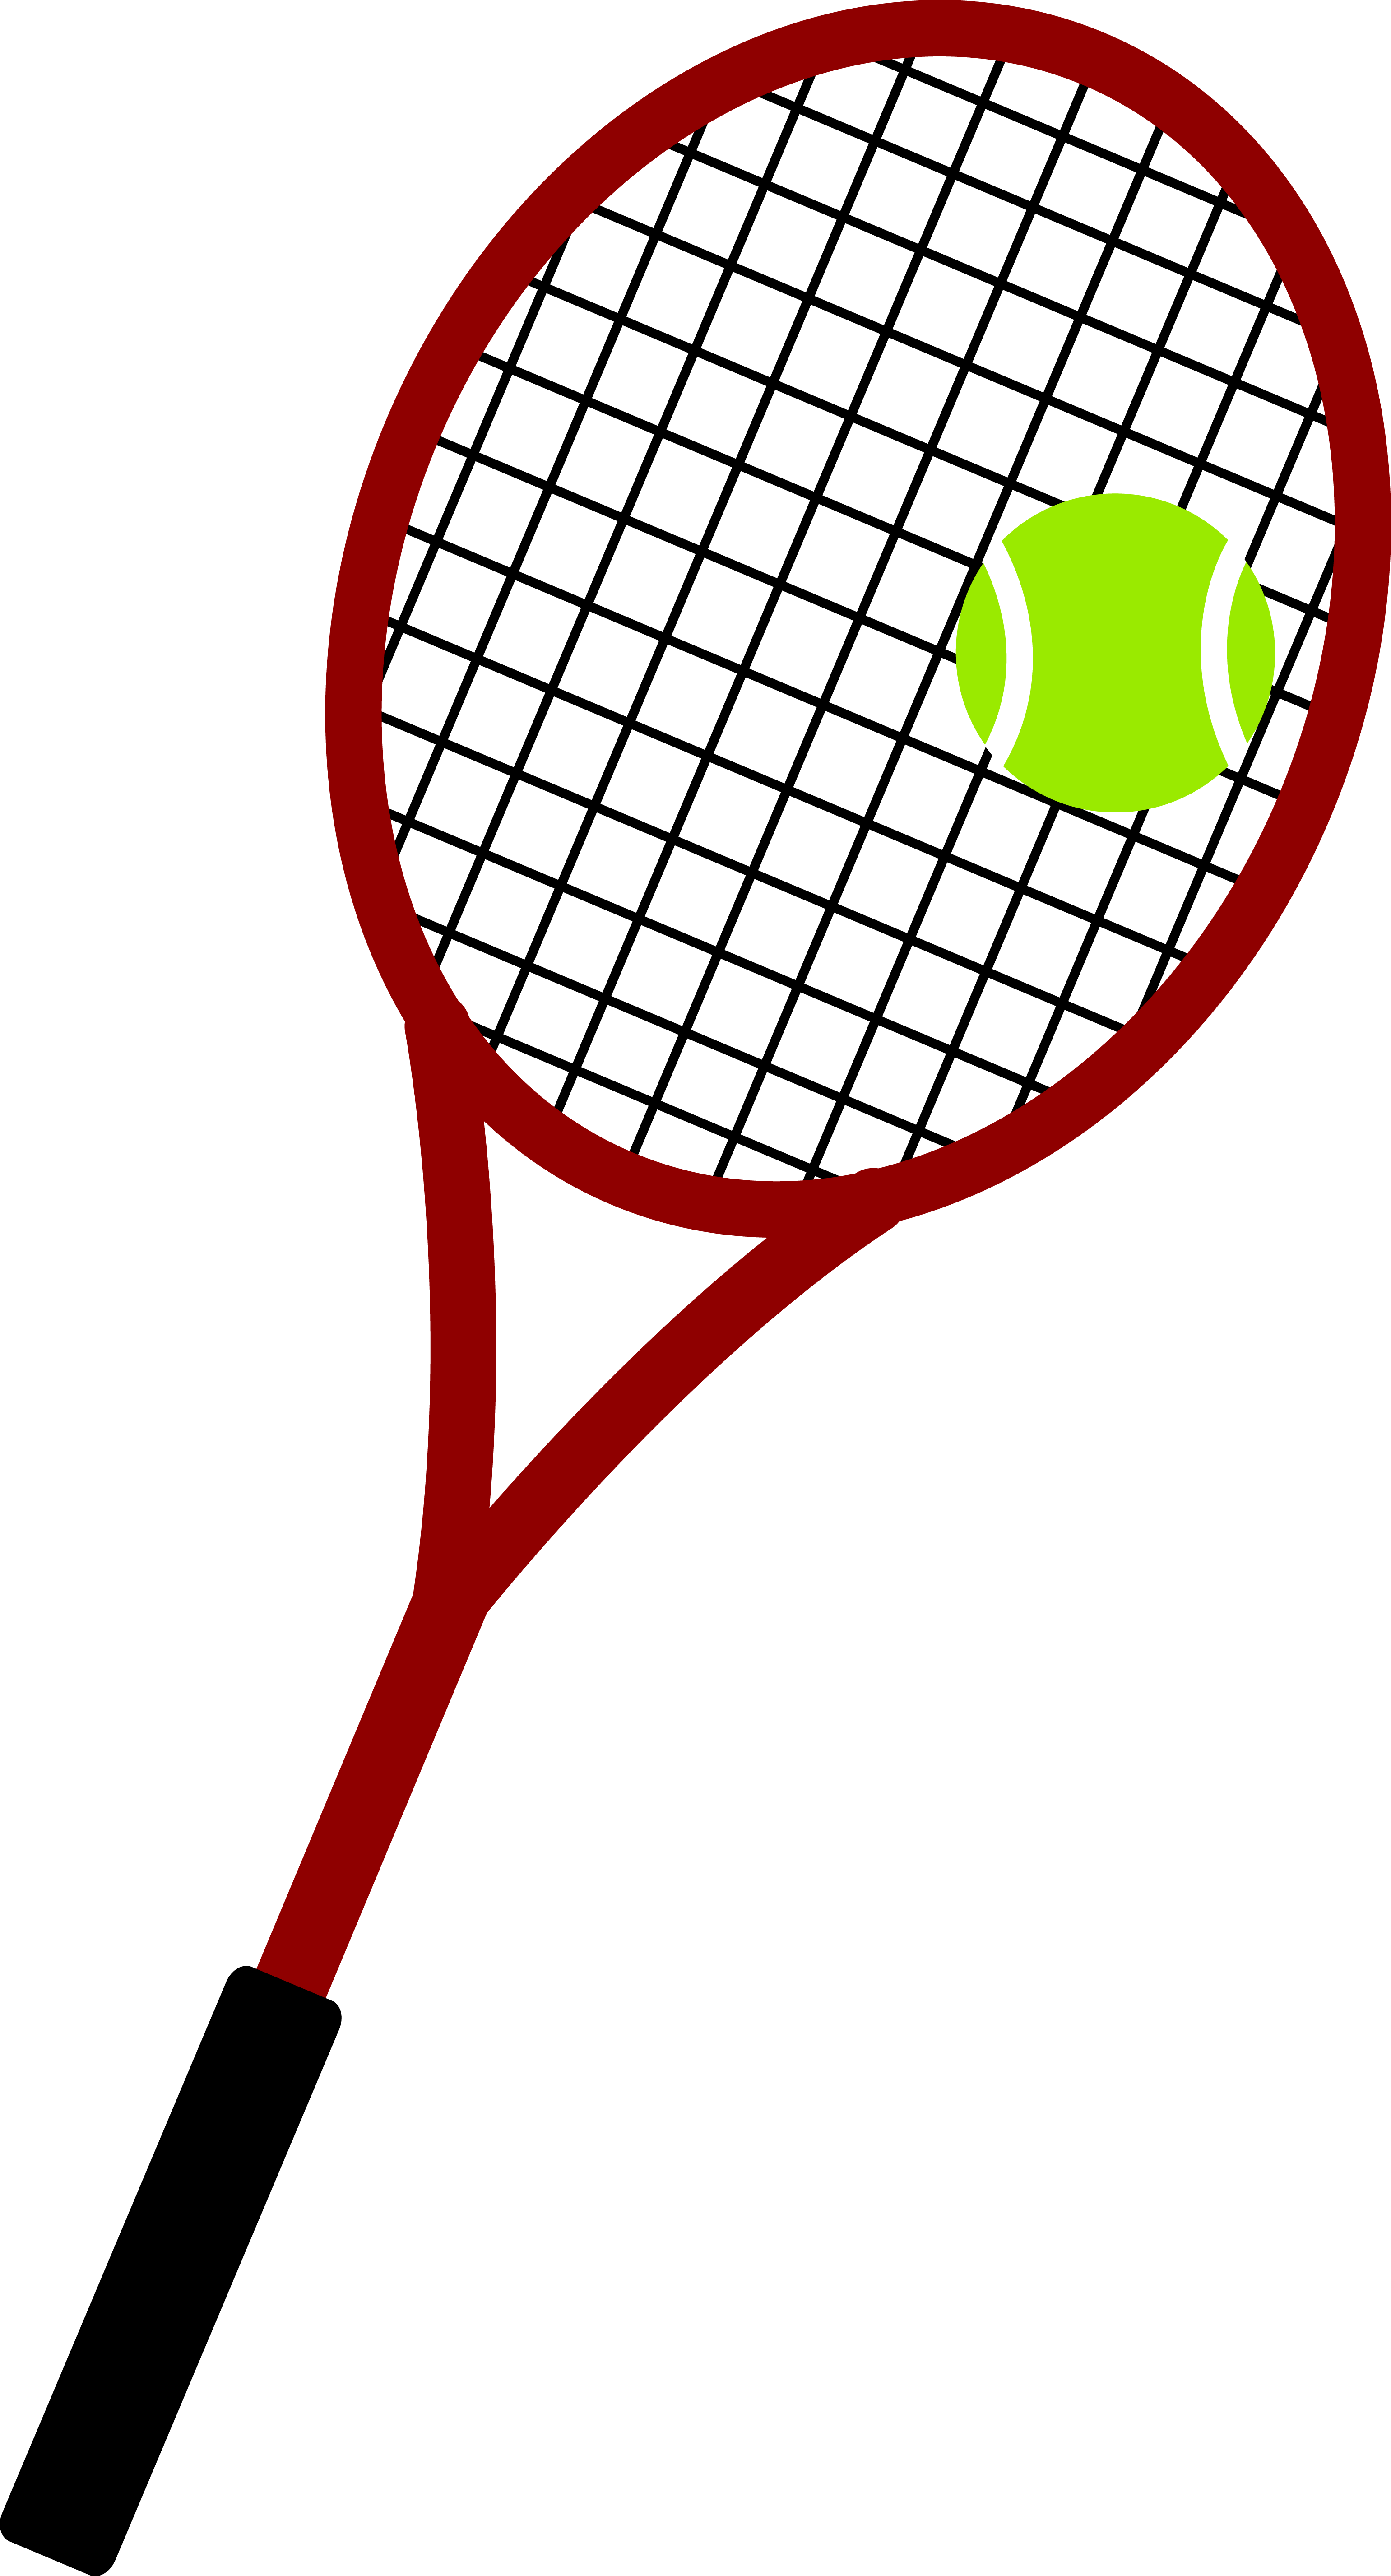 Free Tennis Cartoon Images, Download Free Clip Art, Free.